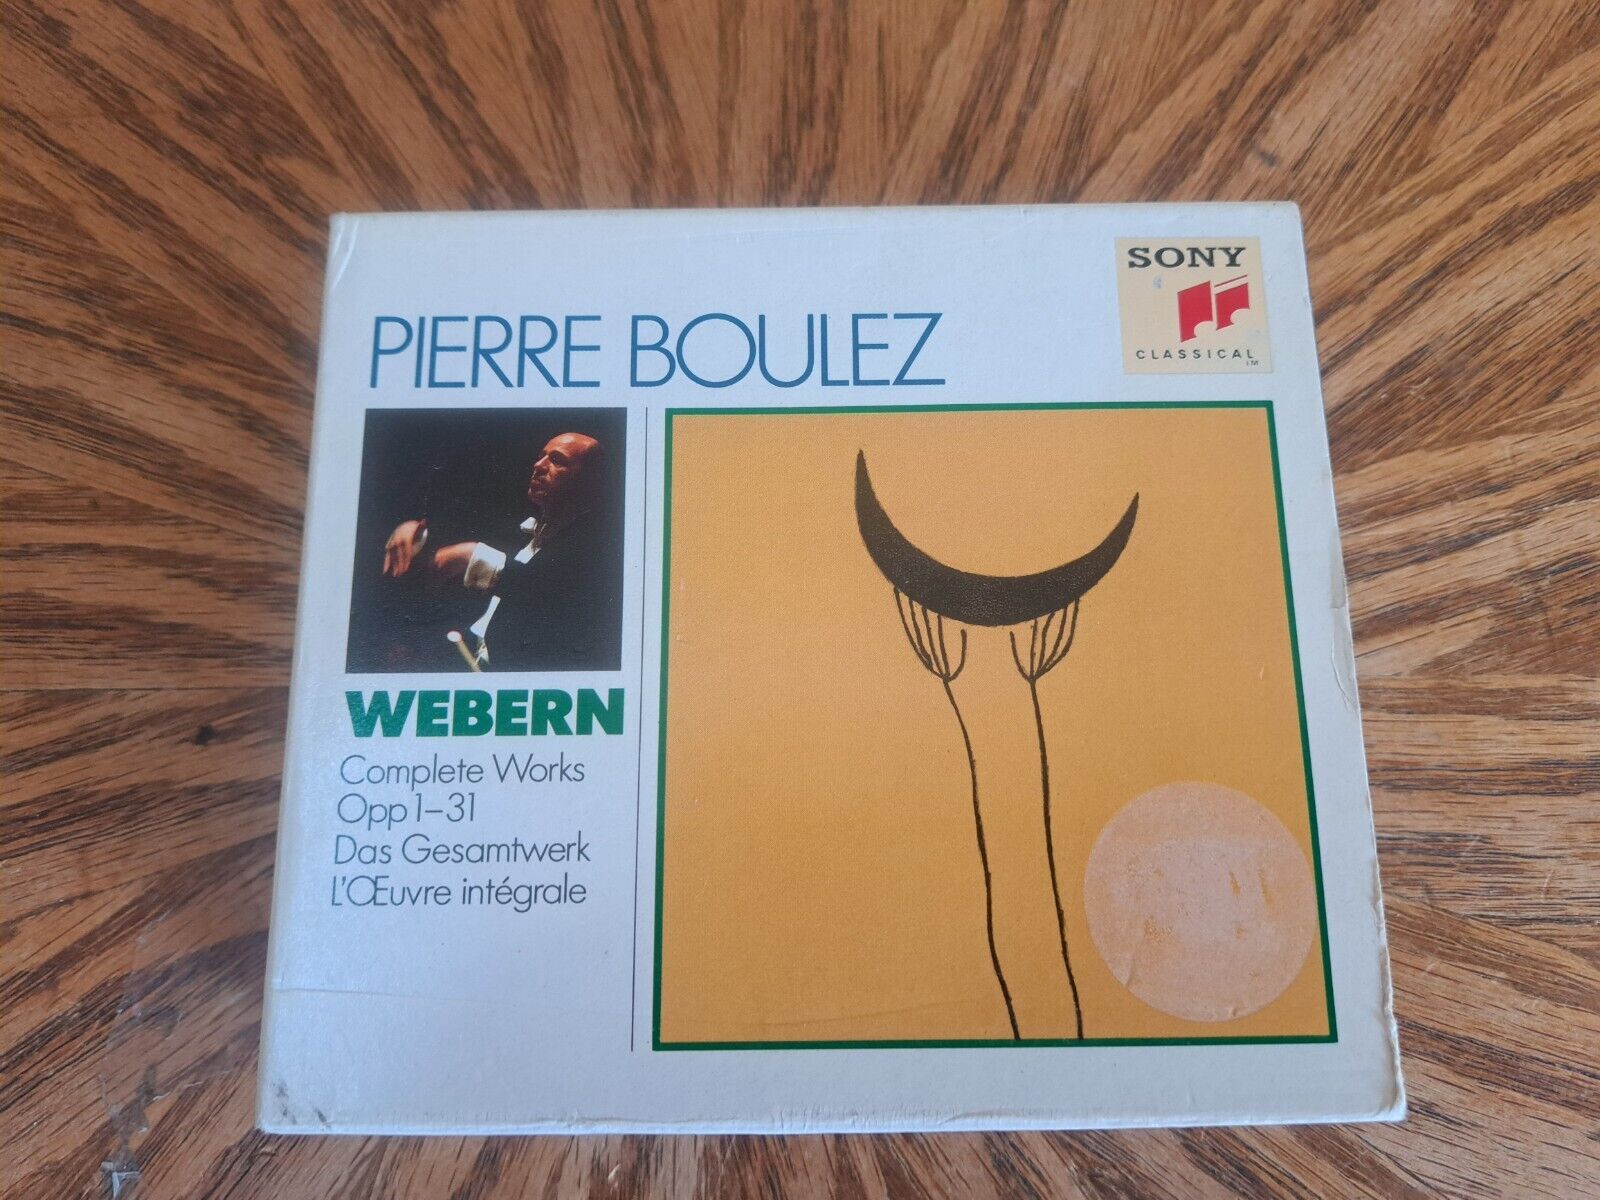 Pierre Boulez- Webern Complete Works Opp 1-31 CD Box Set Juilliard Quartet LS Or